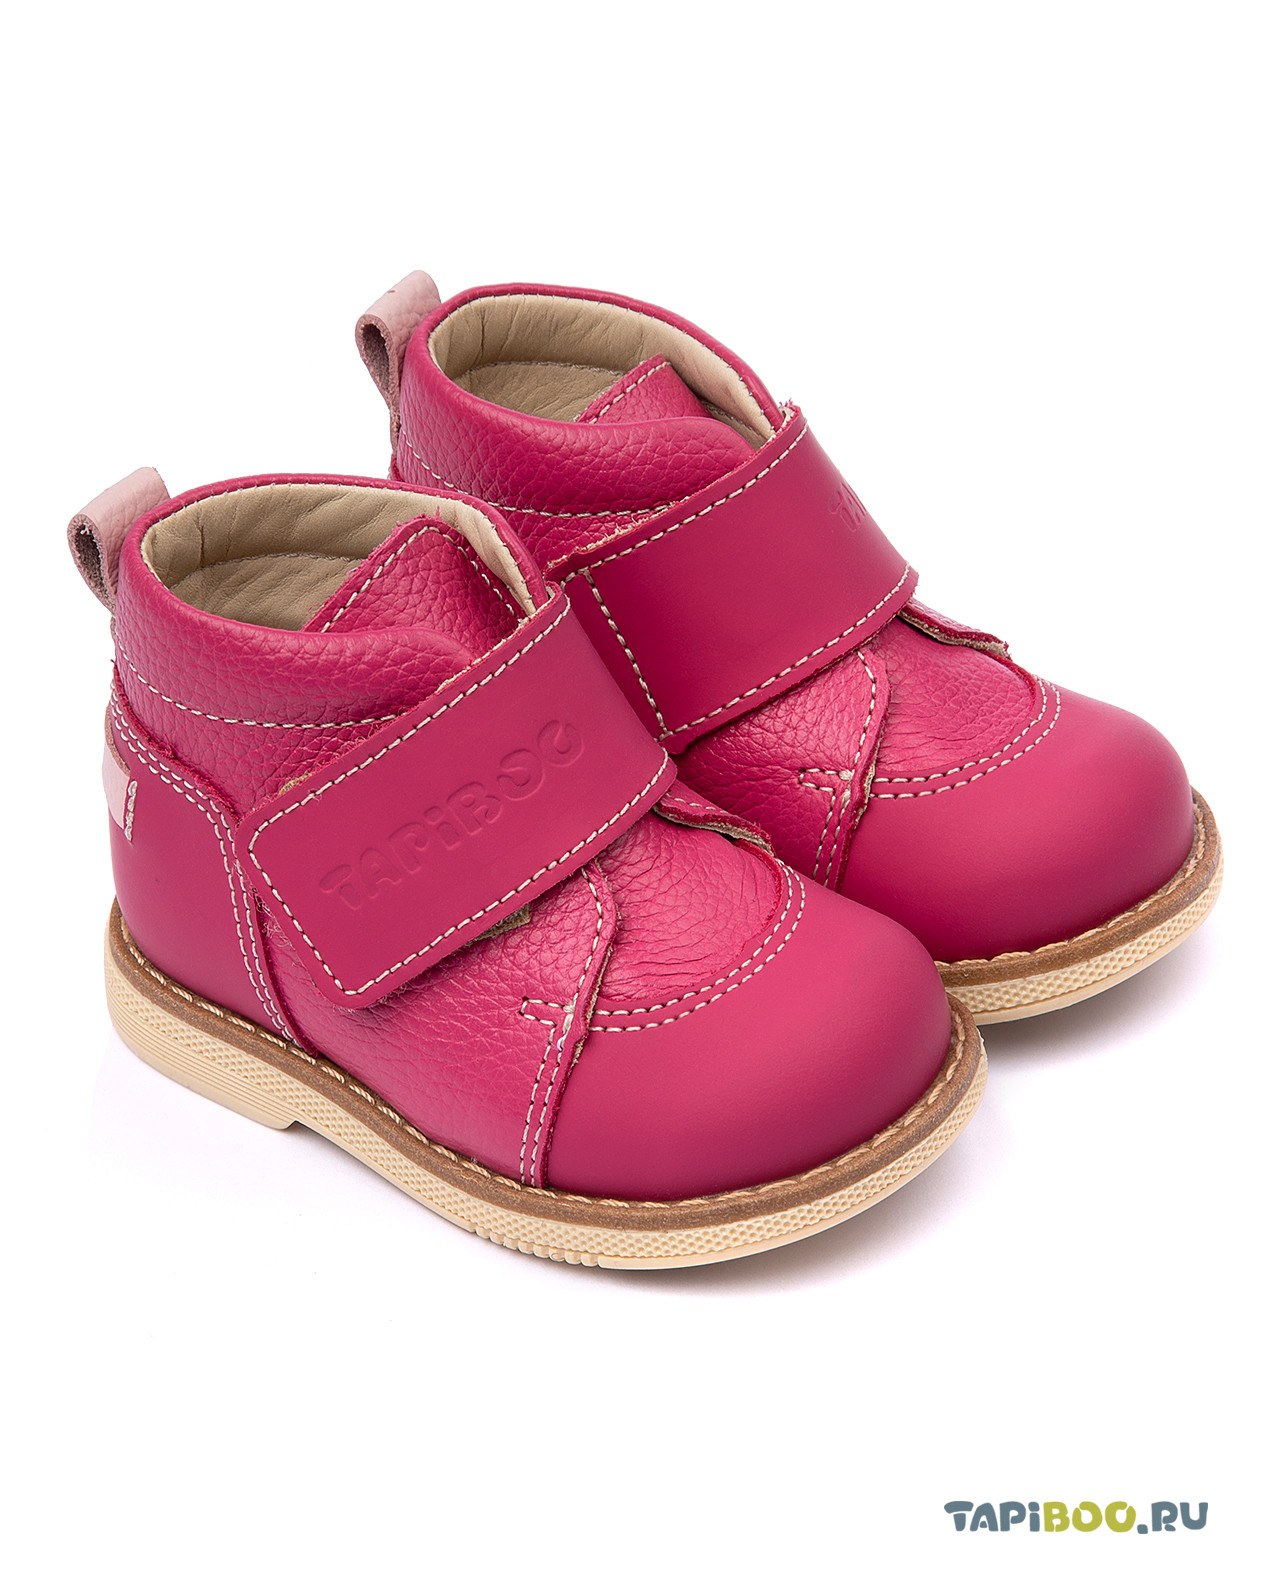 Ботинки детские Tapiboo ФУКСИЯ (71693, 20) ботинки детские tapiboo фуксия радуга 76488 25